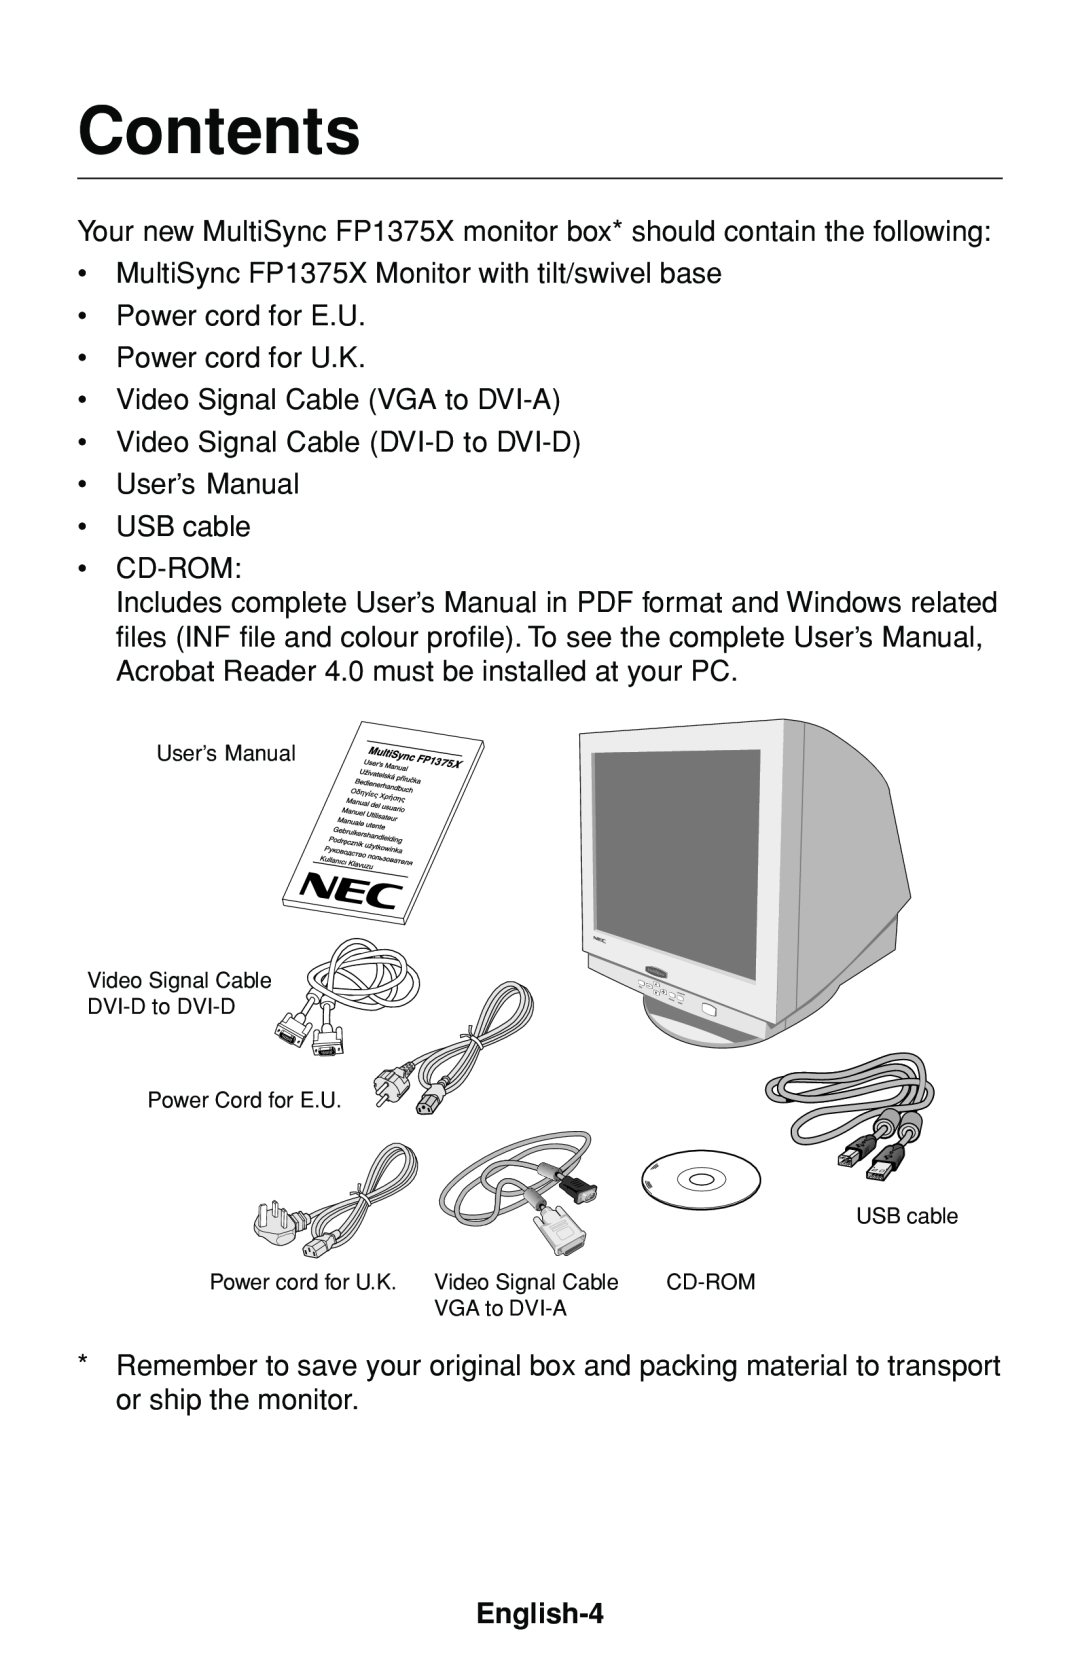 NEC FP1375X user manual Contents, English-4 